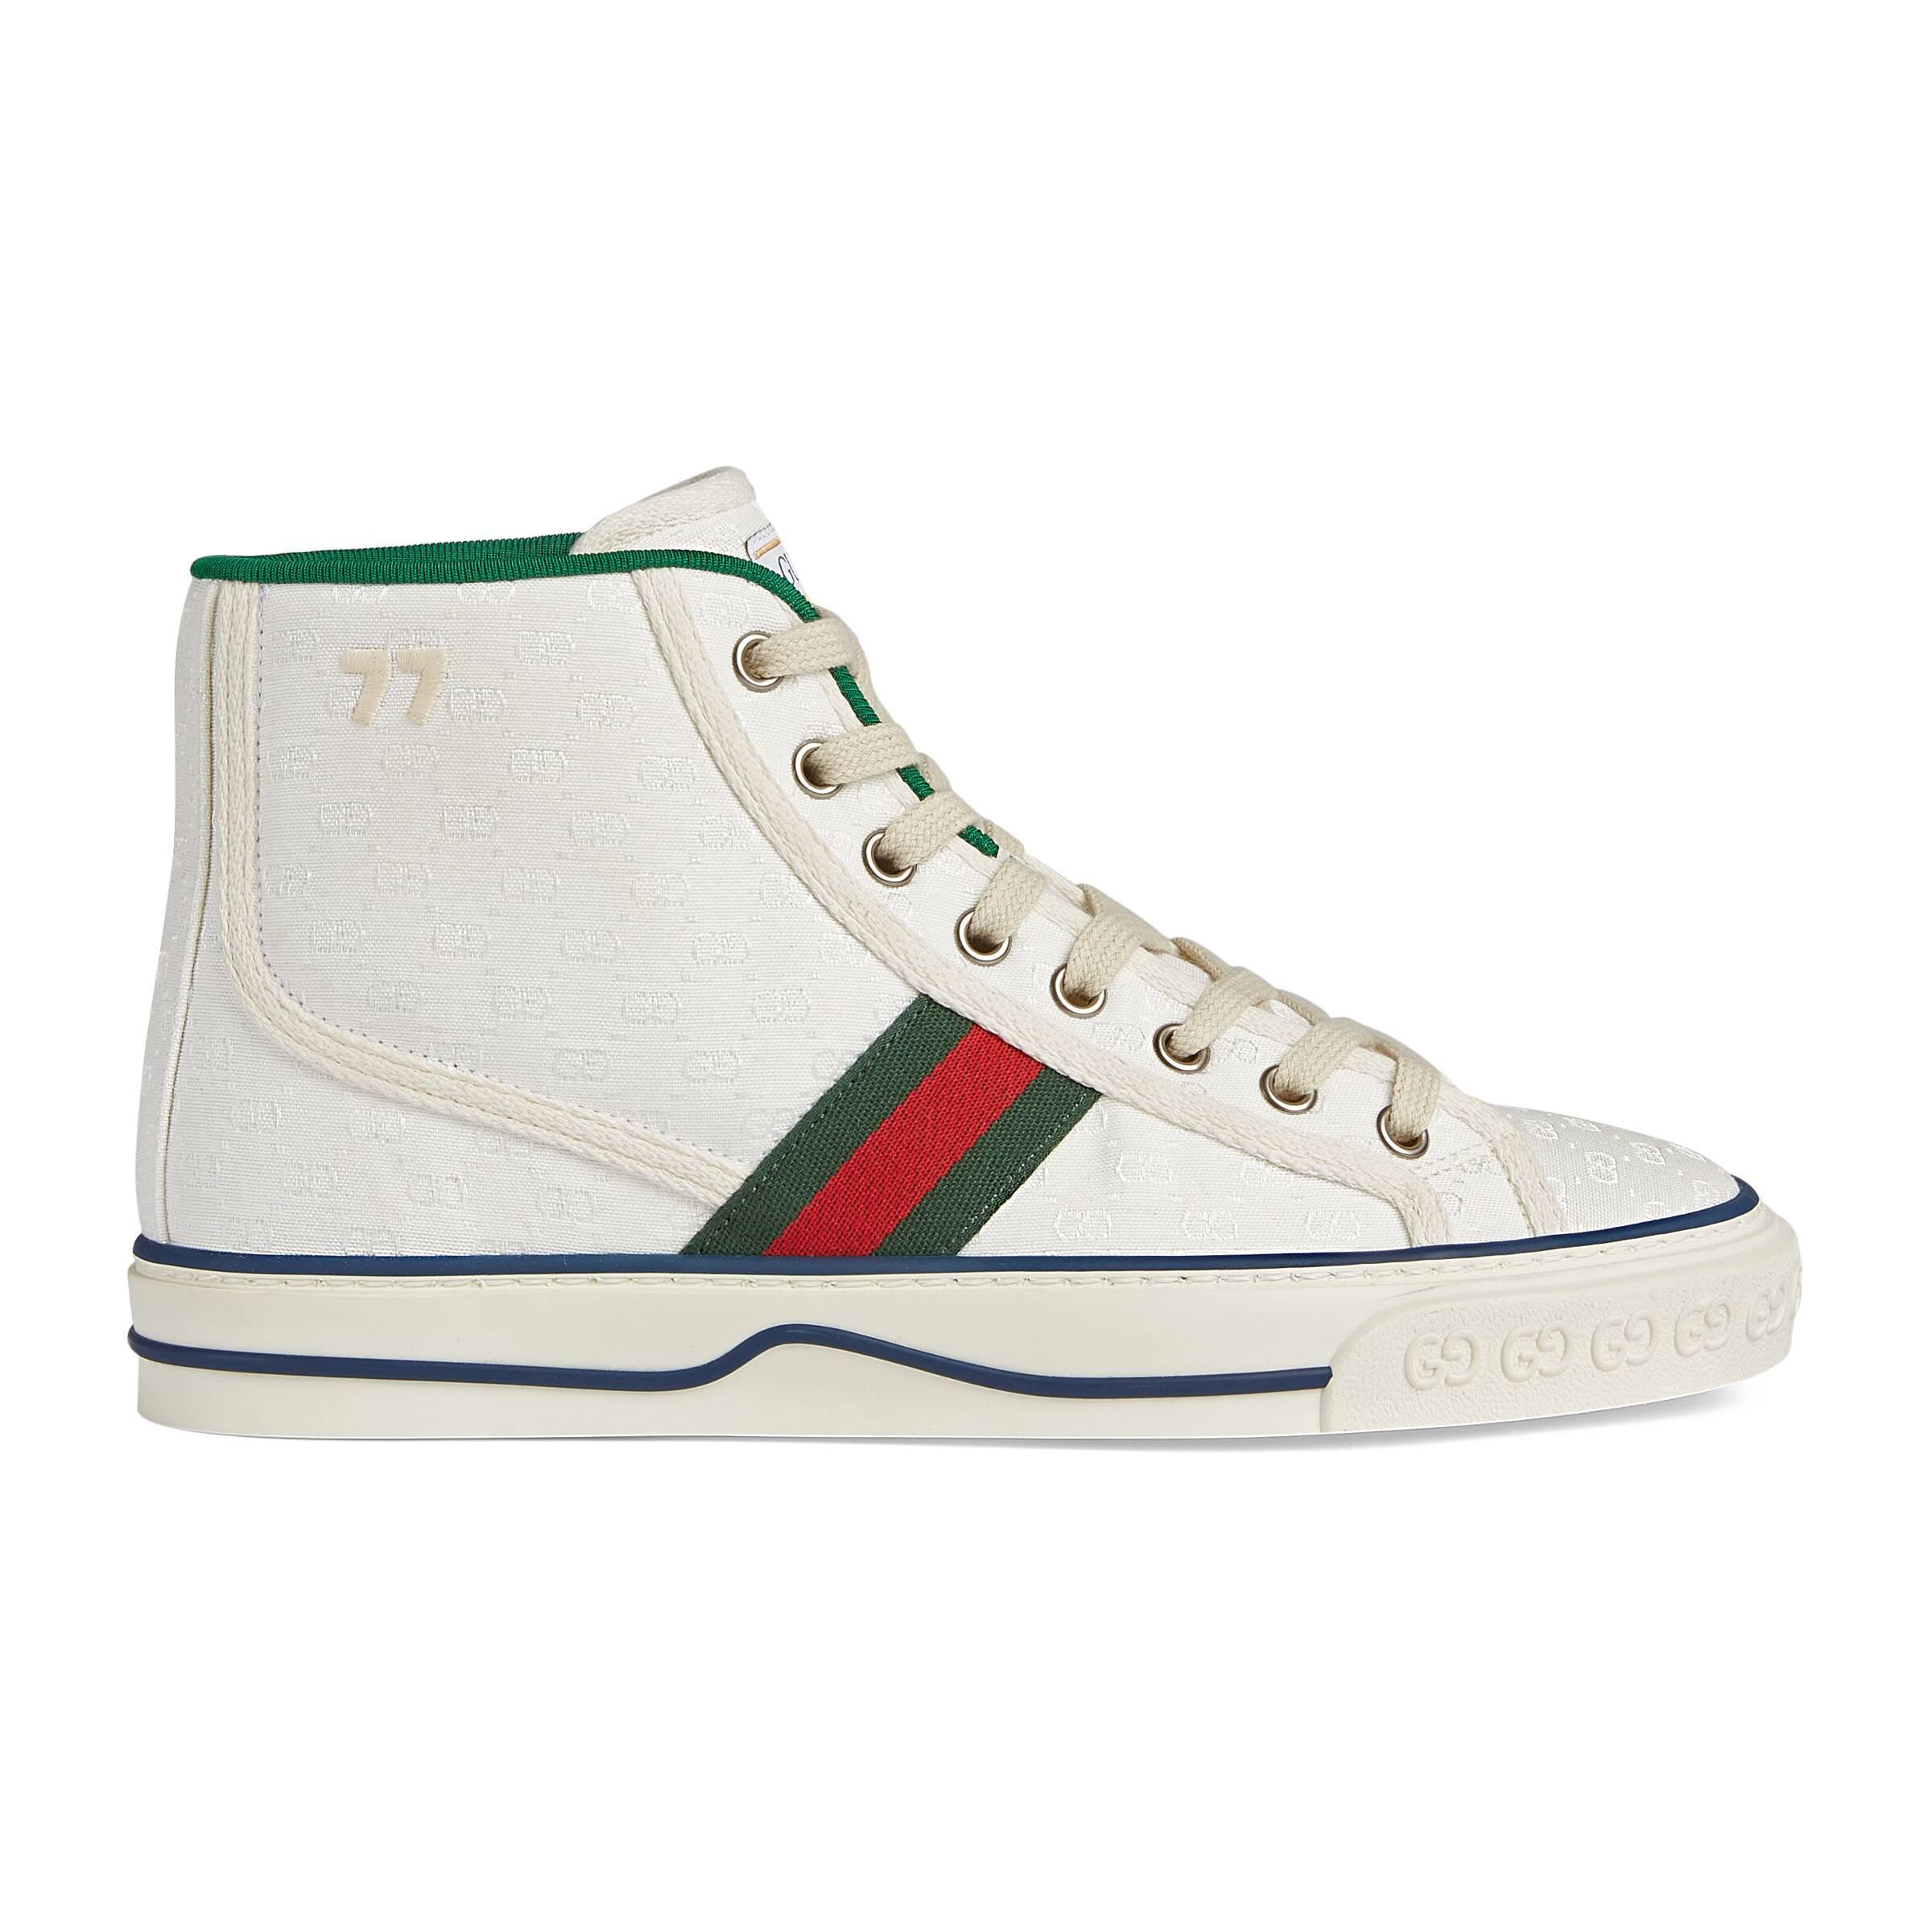 Gucci Tennis 1977 High Top Sneaker in White - Lyst